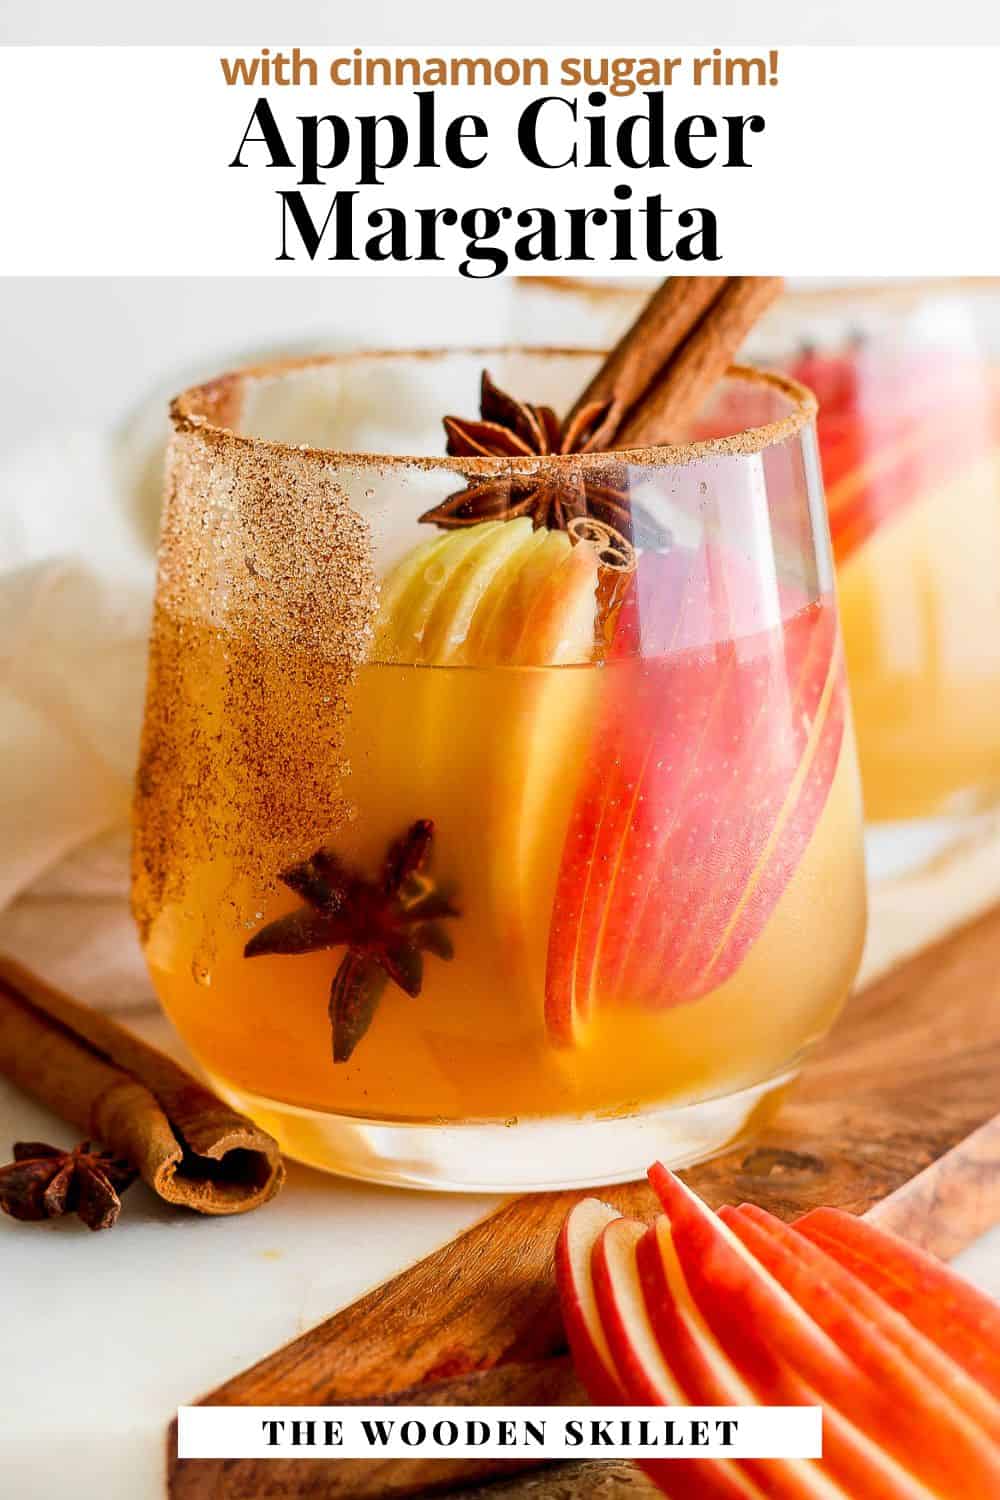 Pinterest image with a shot of an apple cider margarita with the title, "apple cider margarita with cinnamon sugar rim".